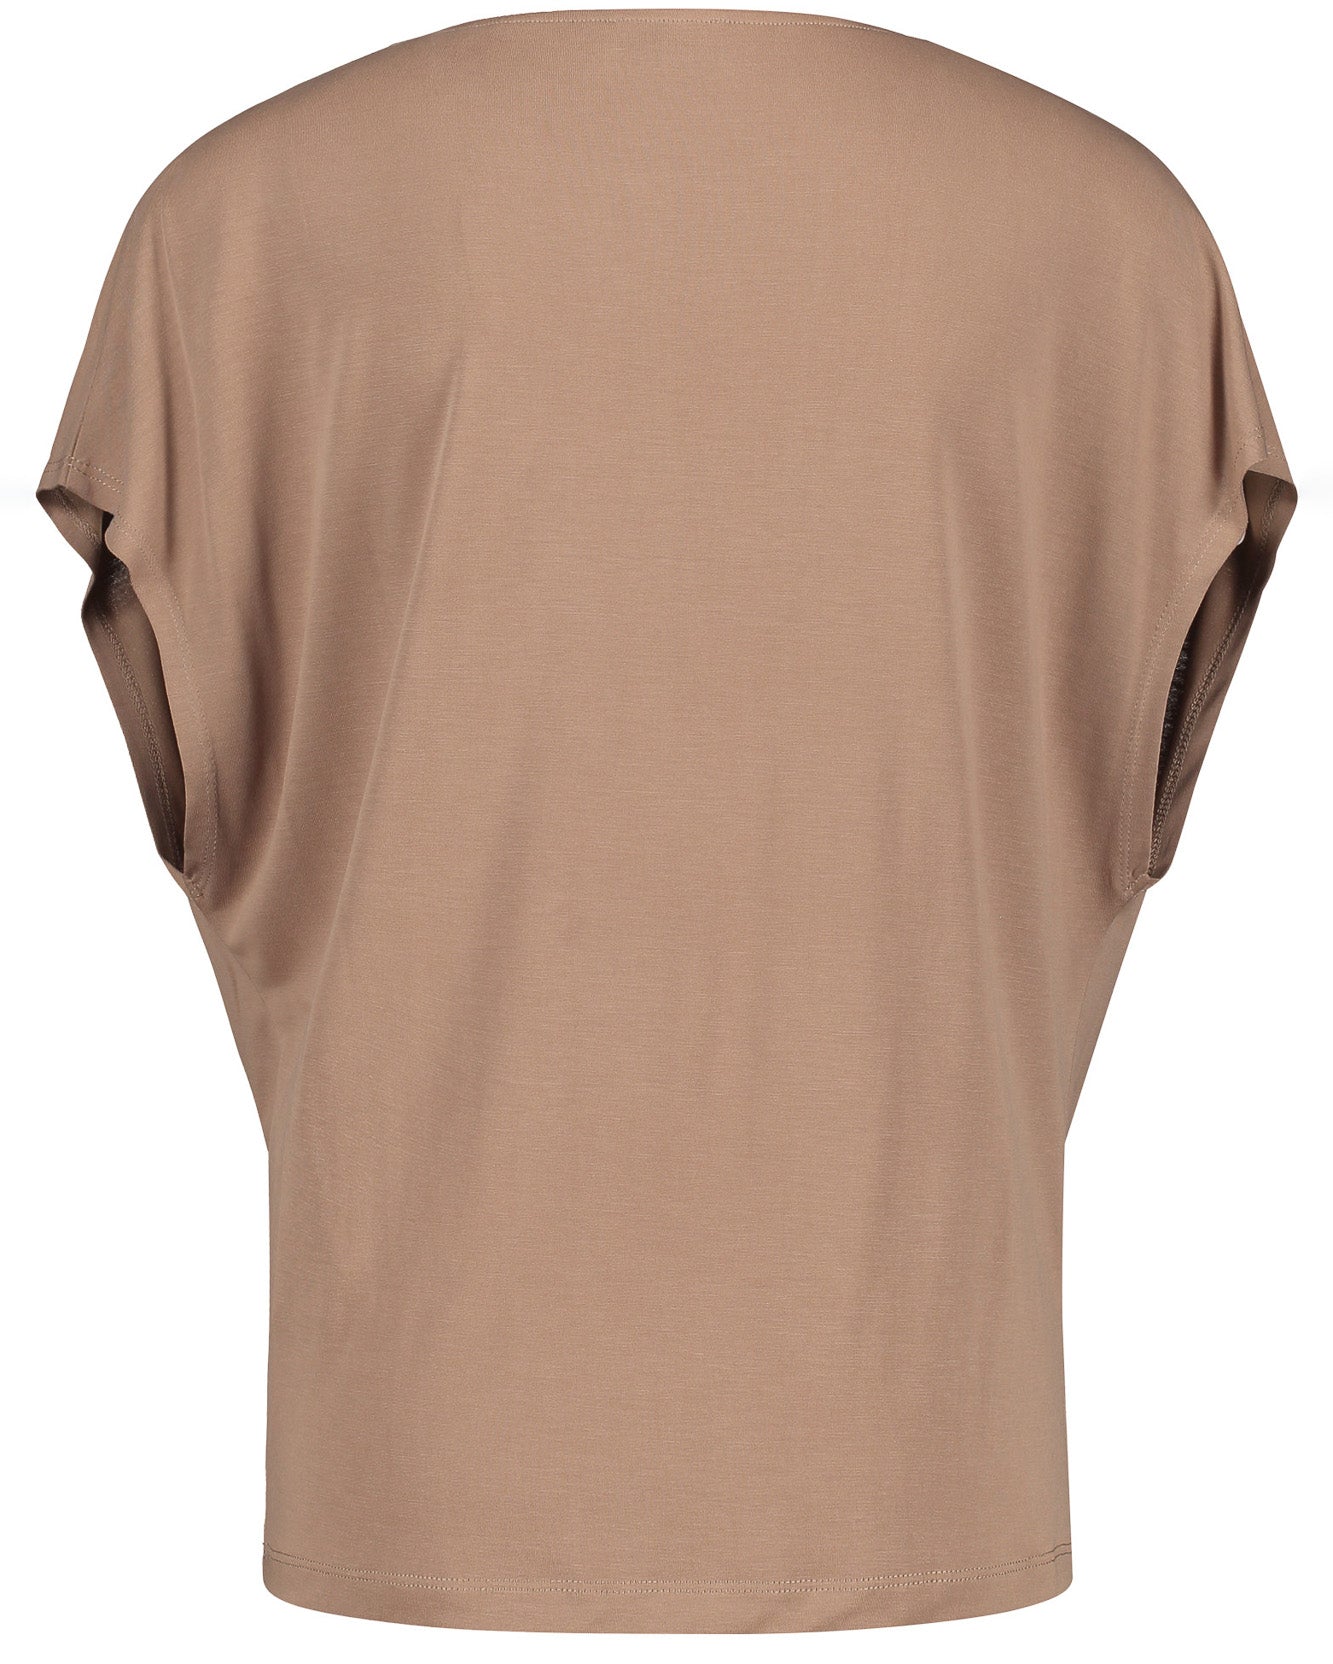 Brown T-Shirt Short-Sleeve Roundneck